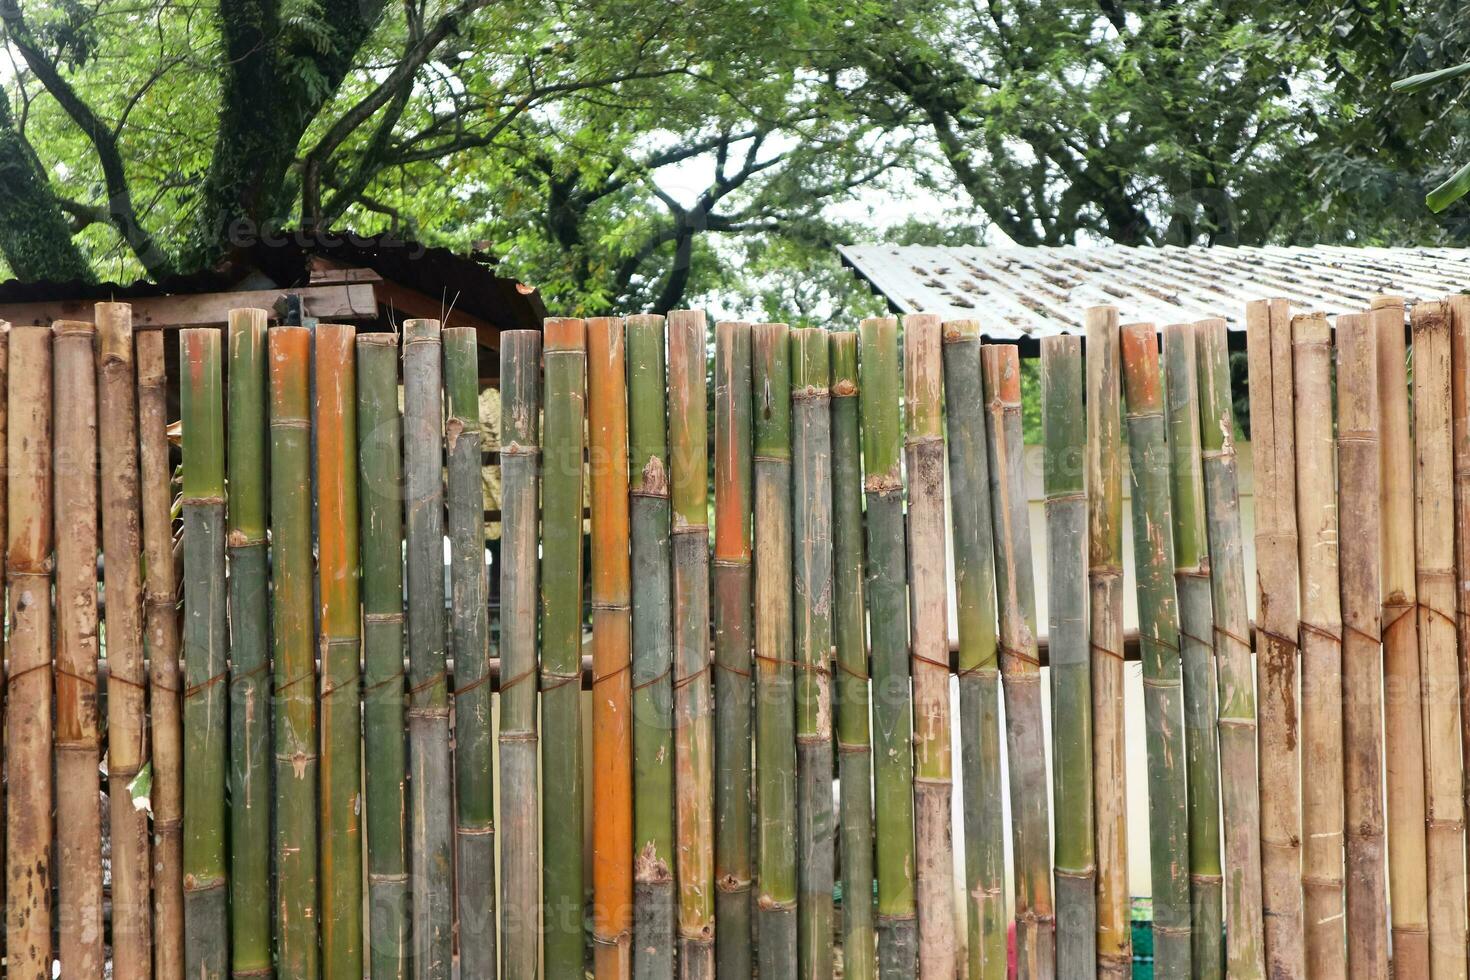 bamboe hek achtergrond wijnoogst kleur foto